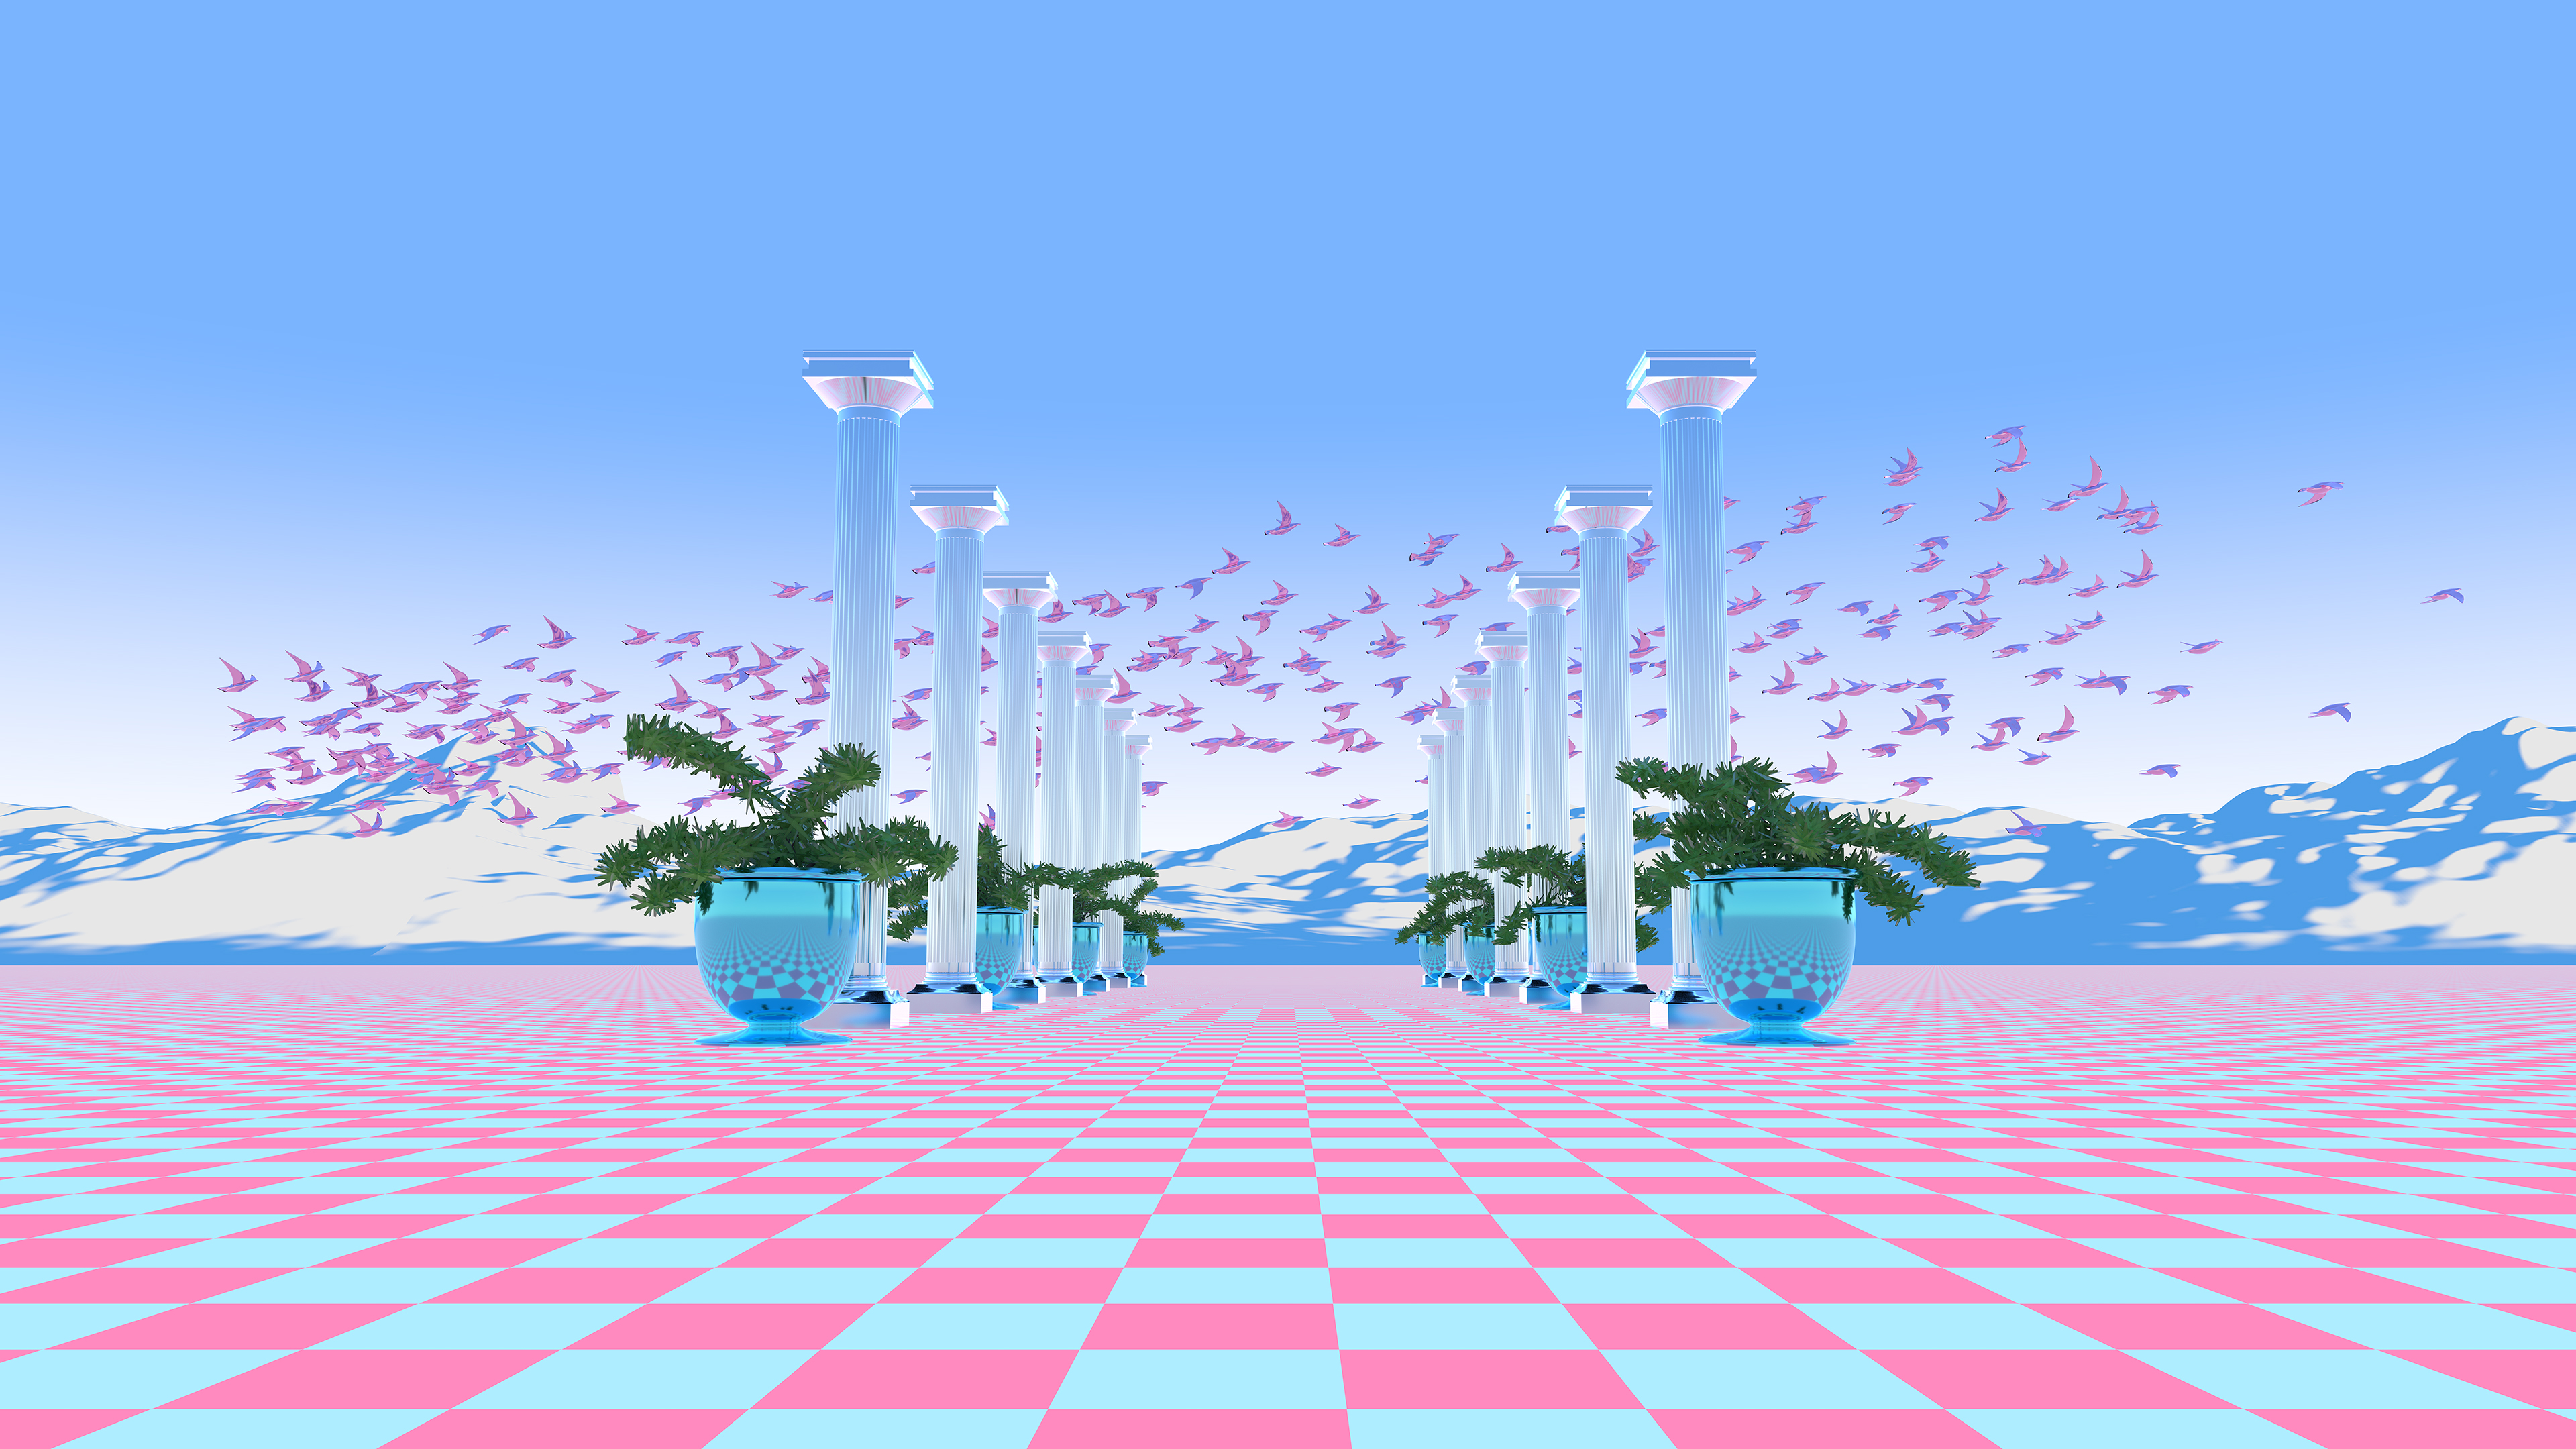 Vaporwave Digital Art Pillar Checkered Pattern Vases Pink Blue Flock Of Birds Potted Plant Plants Sk 3840x2160